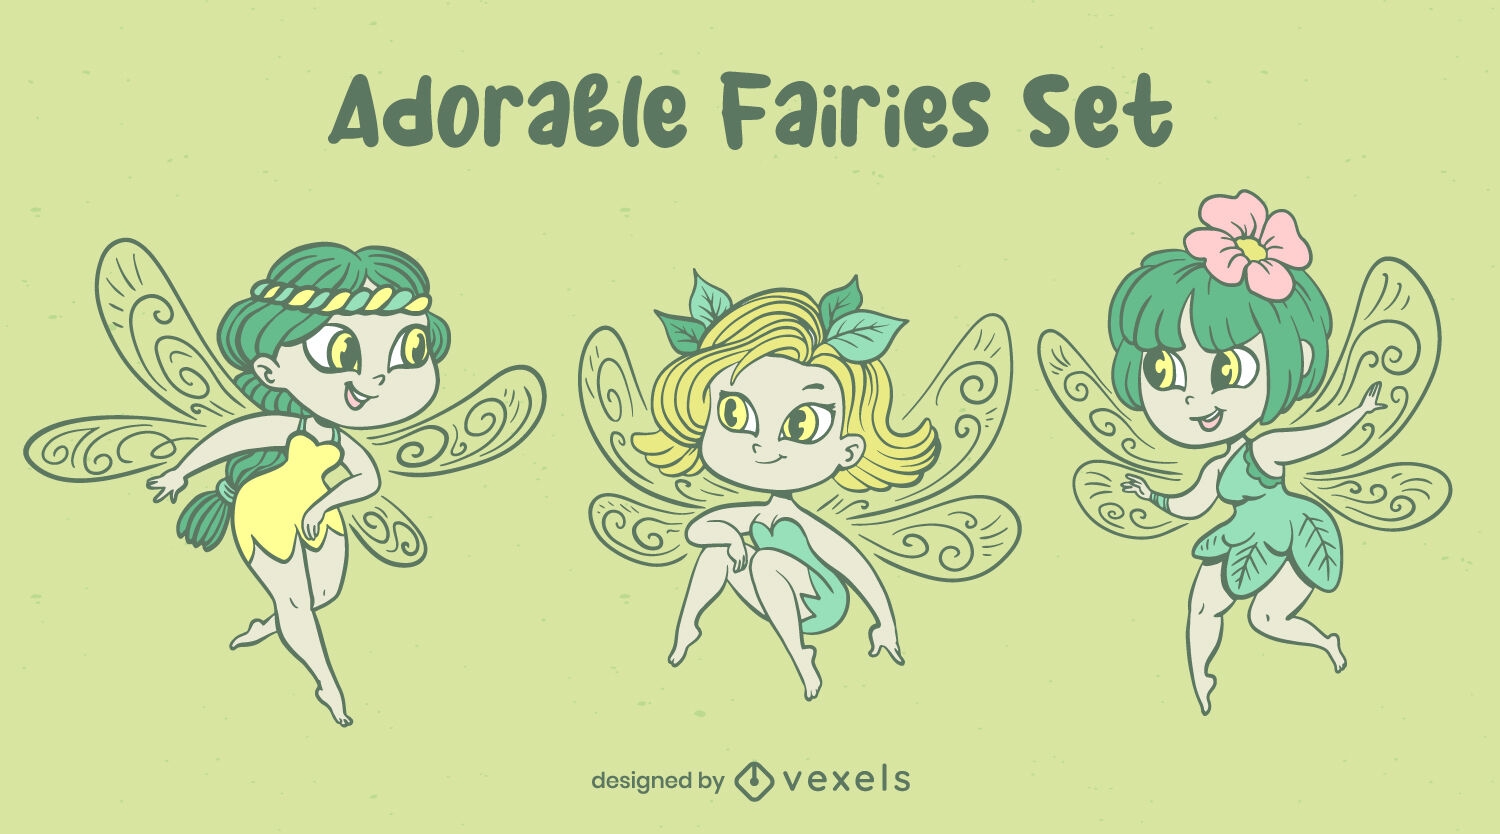 Adorable fairies character set